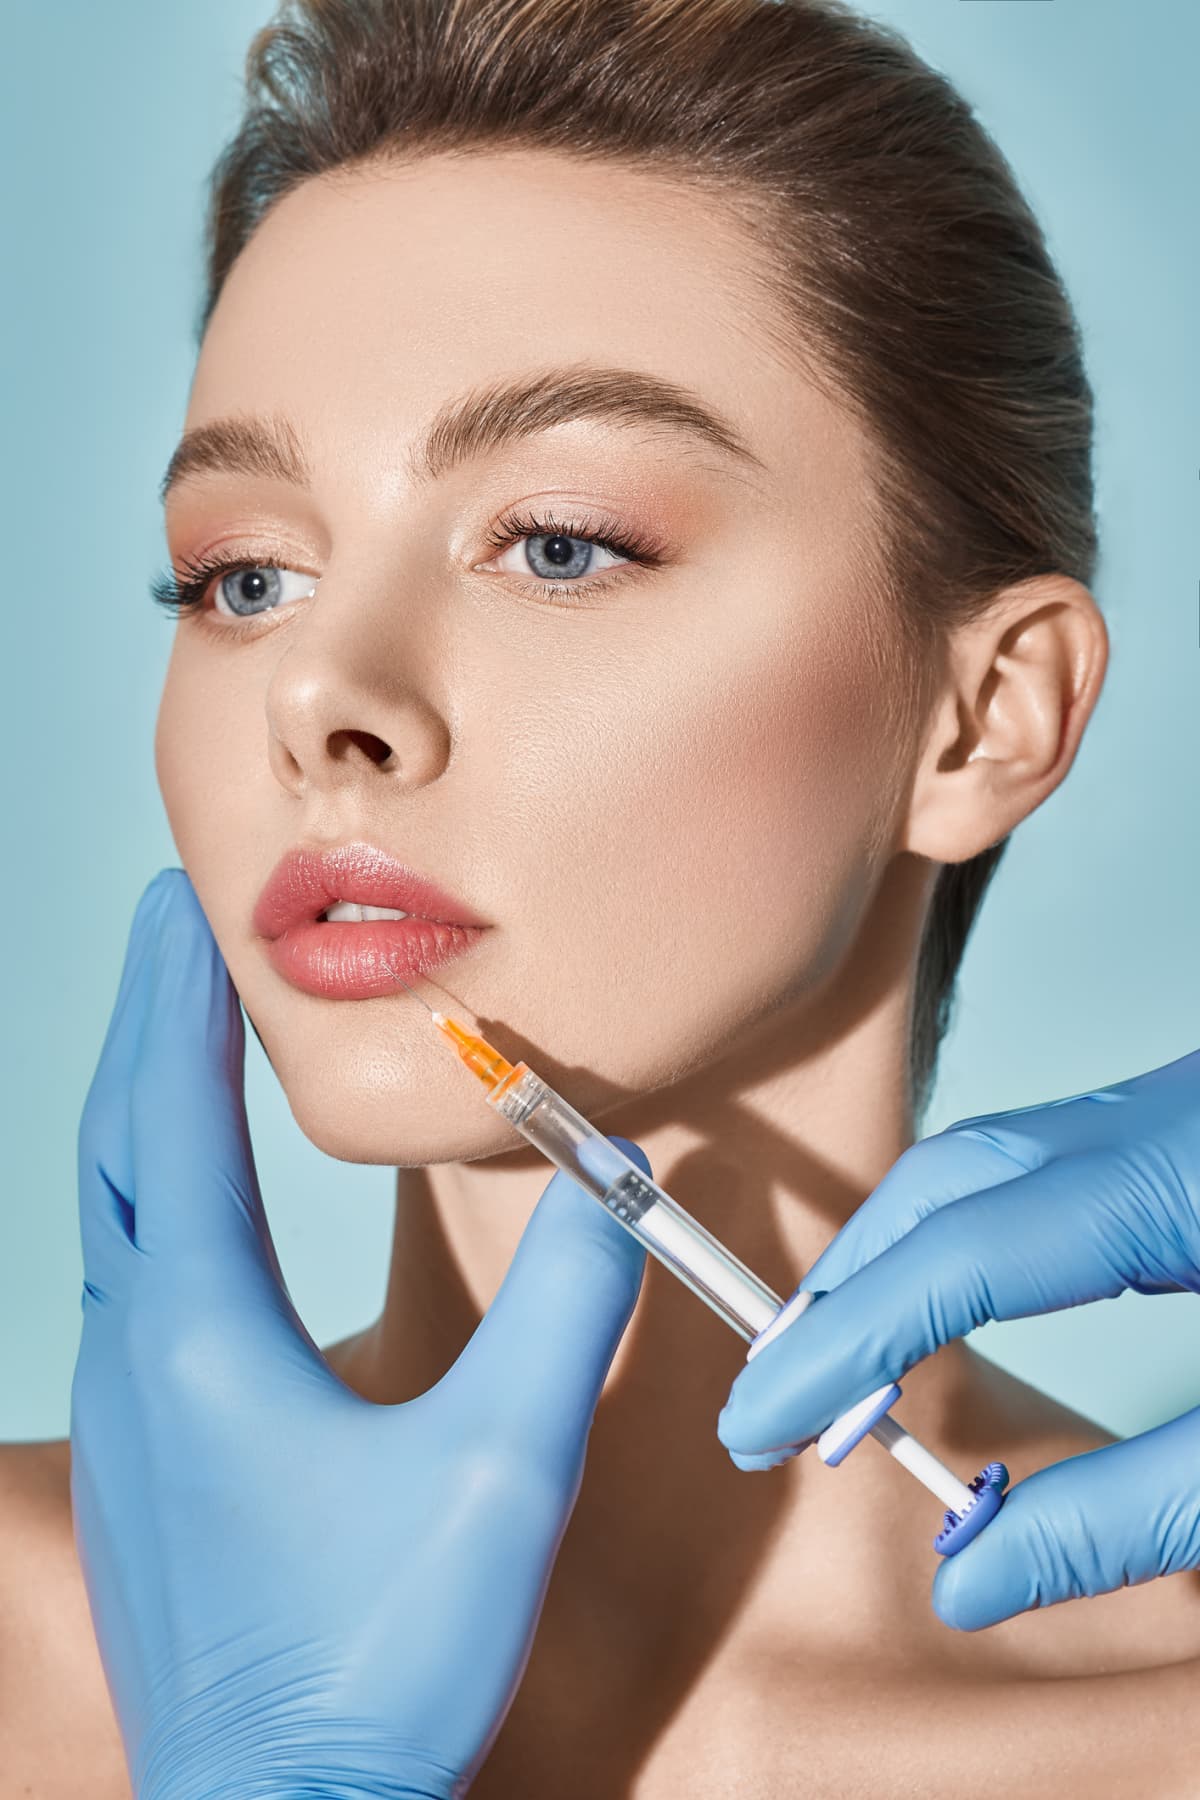 Woman getting cosmetic injection of botox near lips, closeup. Woman in beauty salon. plastic surgery clinic.